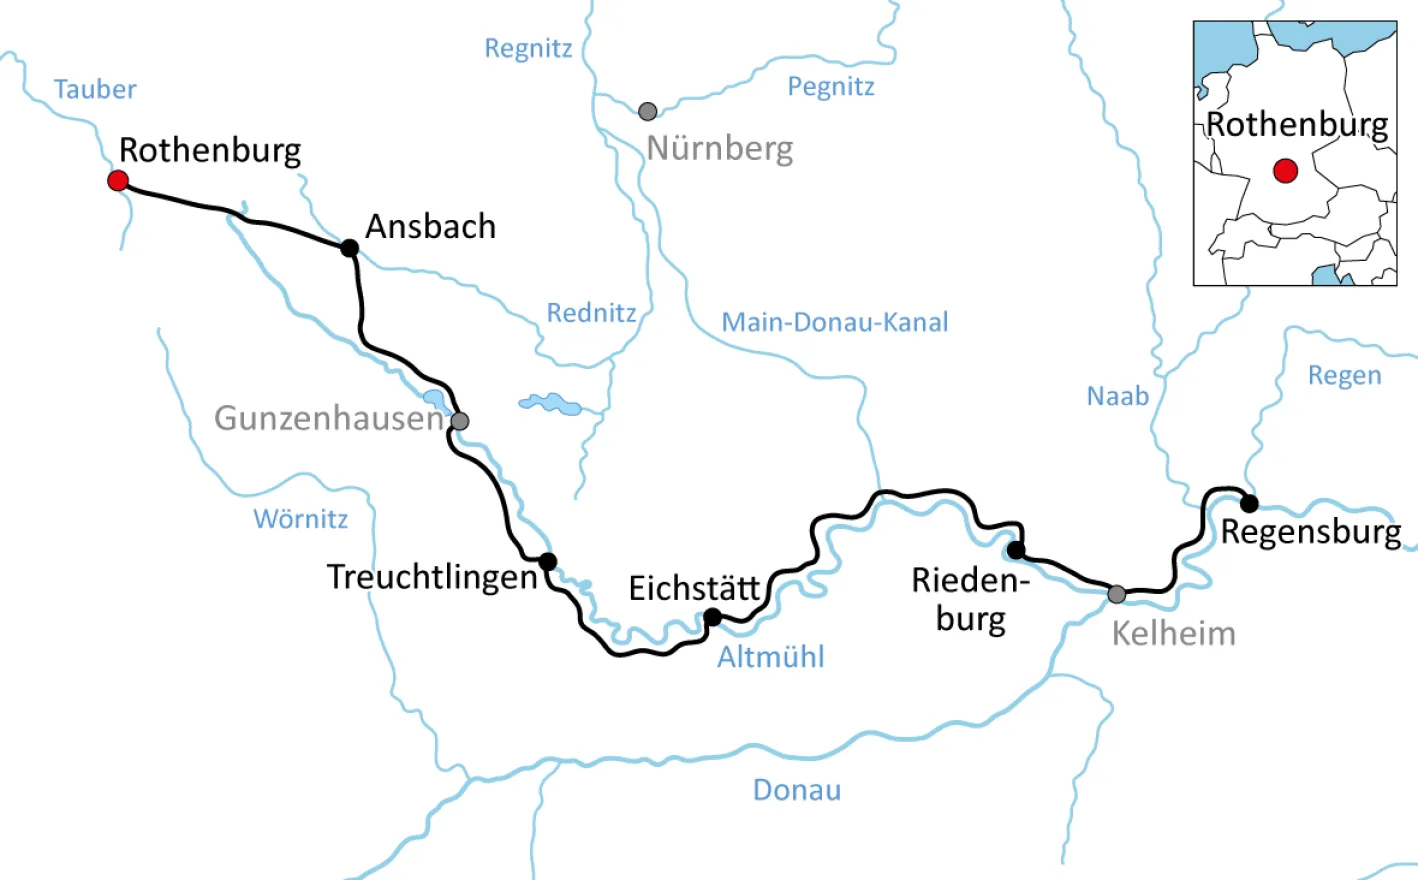 Bike tour along the Altmühl from Rothenburg to Regensburg